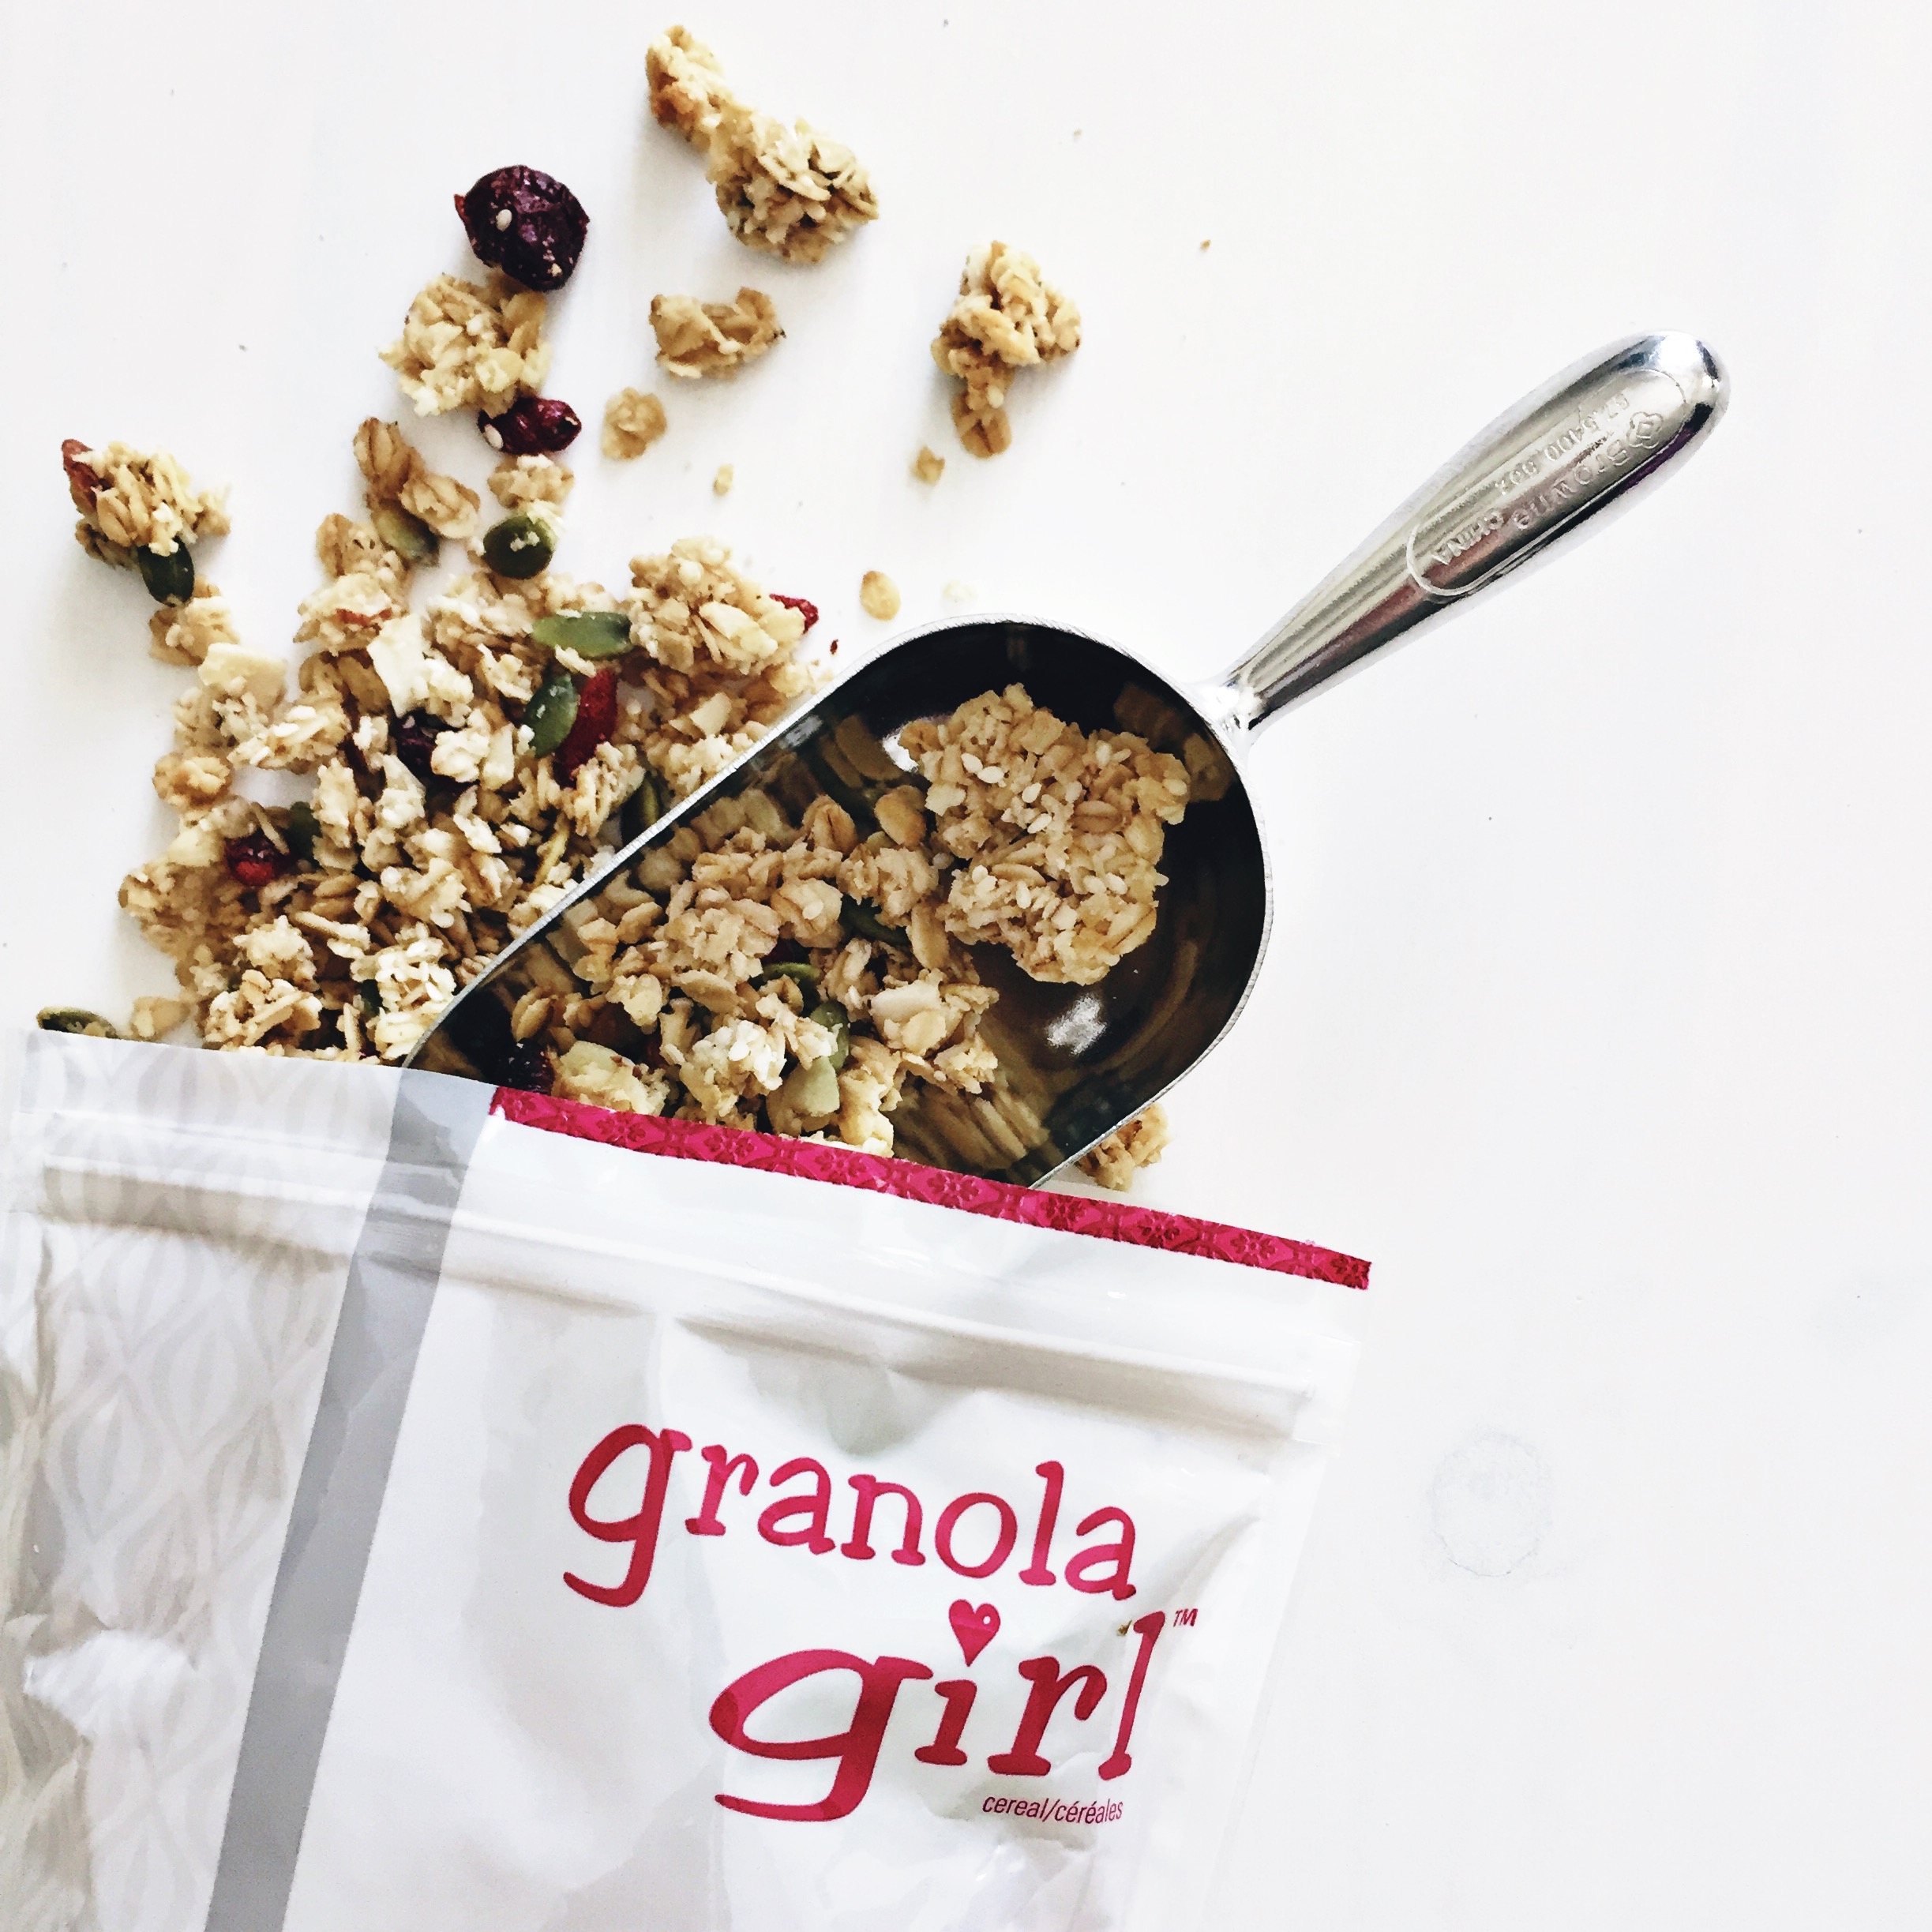 Granola Girl granola 